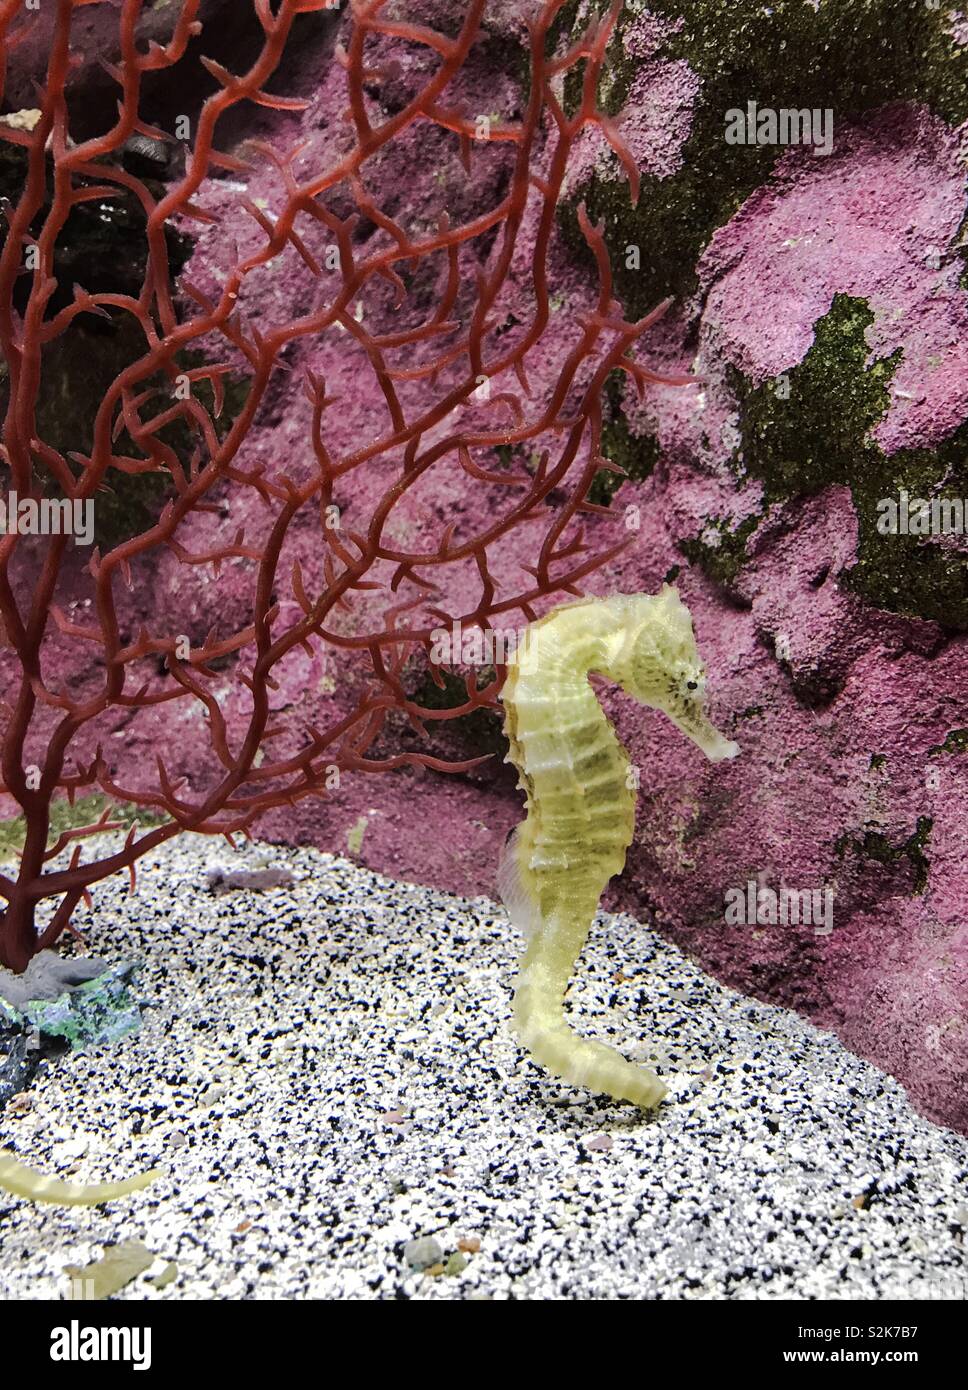 Long-Snouted Seahorse (Hippocampus Guttulatus) in Belle Isle Aquarium, Detroit, Michigan, USA. Photo Credit: Ann M. Nicgorski, 2018. Stock Photo